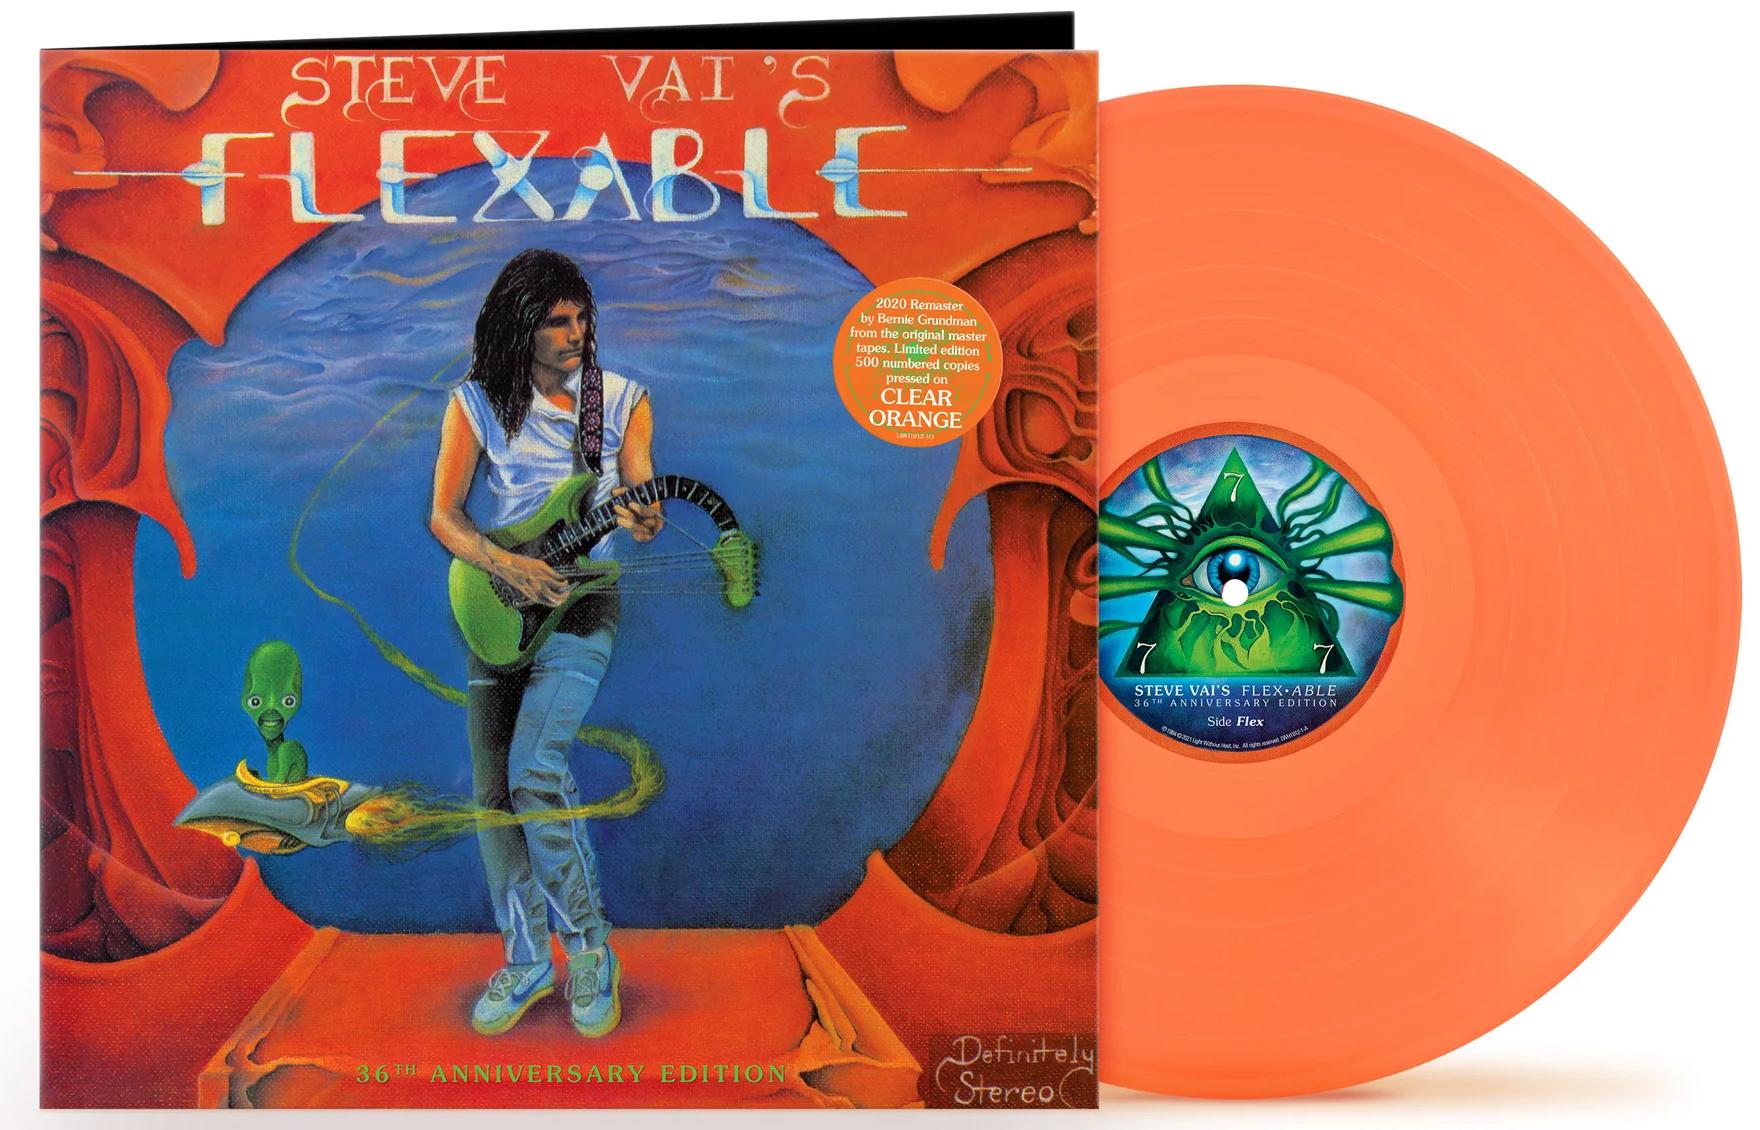 Flex-Able 36th anniversary edition vinile arancione | Steve Vai | stevevai.it